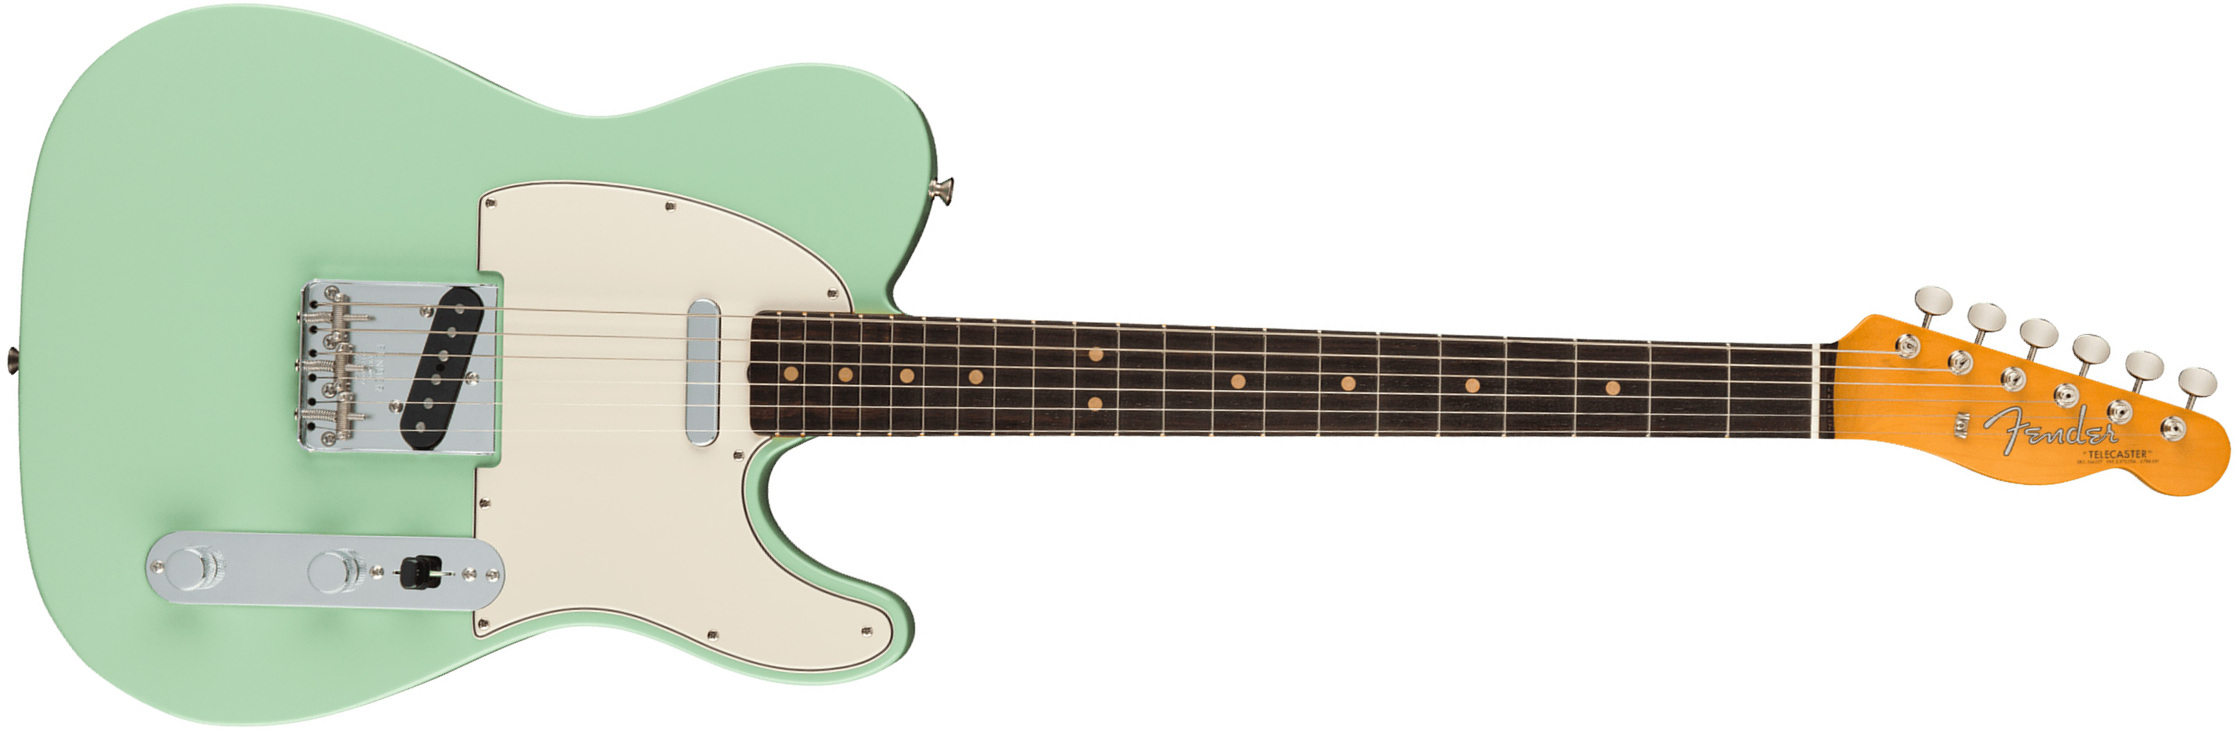 Fender Tele 1963 American Vintage Ii Usa 2s Ht Rw - Surf Green - Televorm elektrische gitaar - Main picture